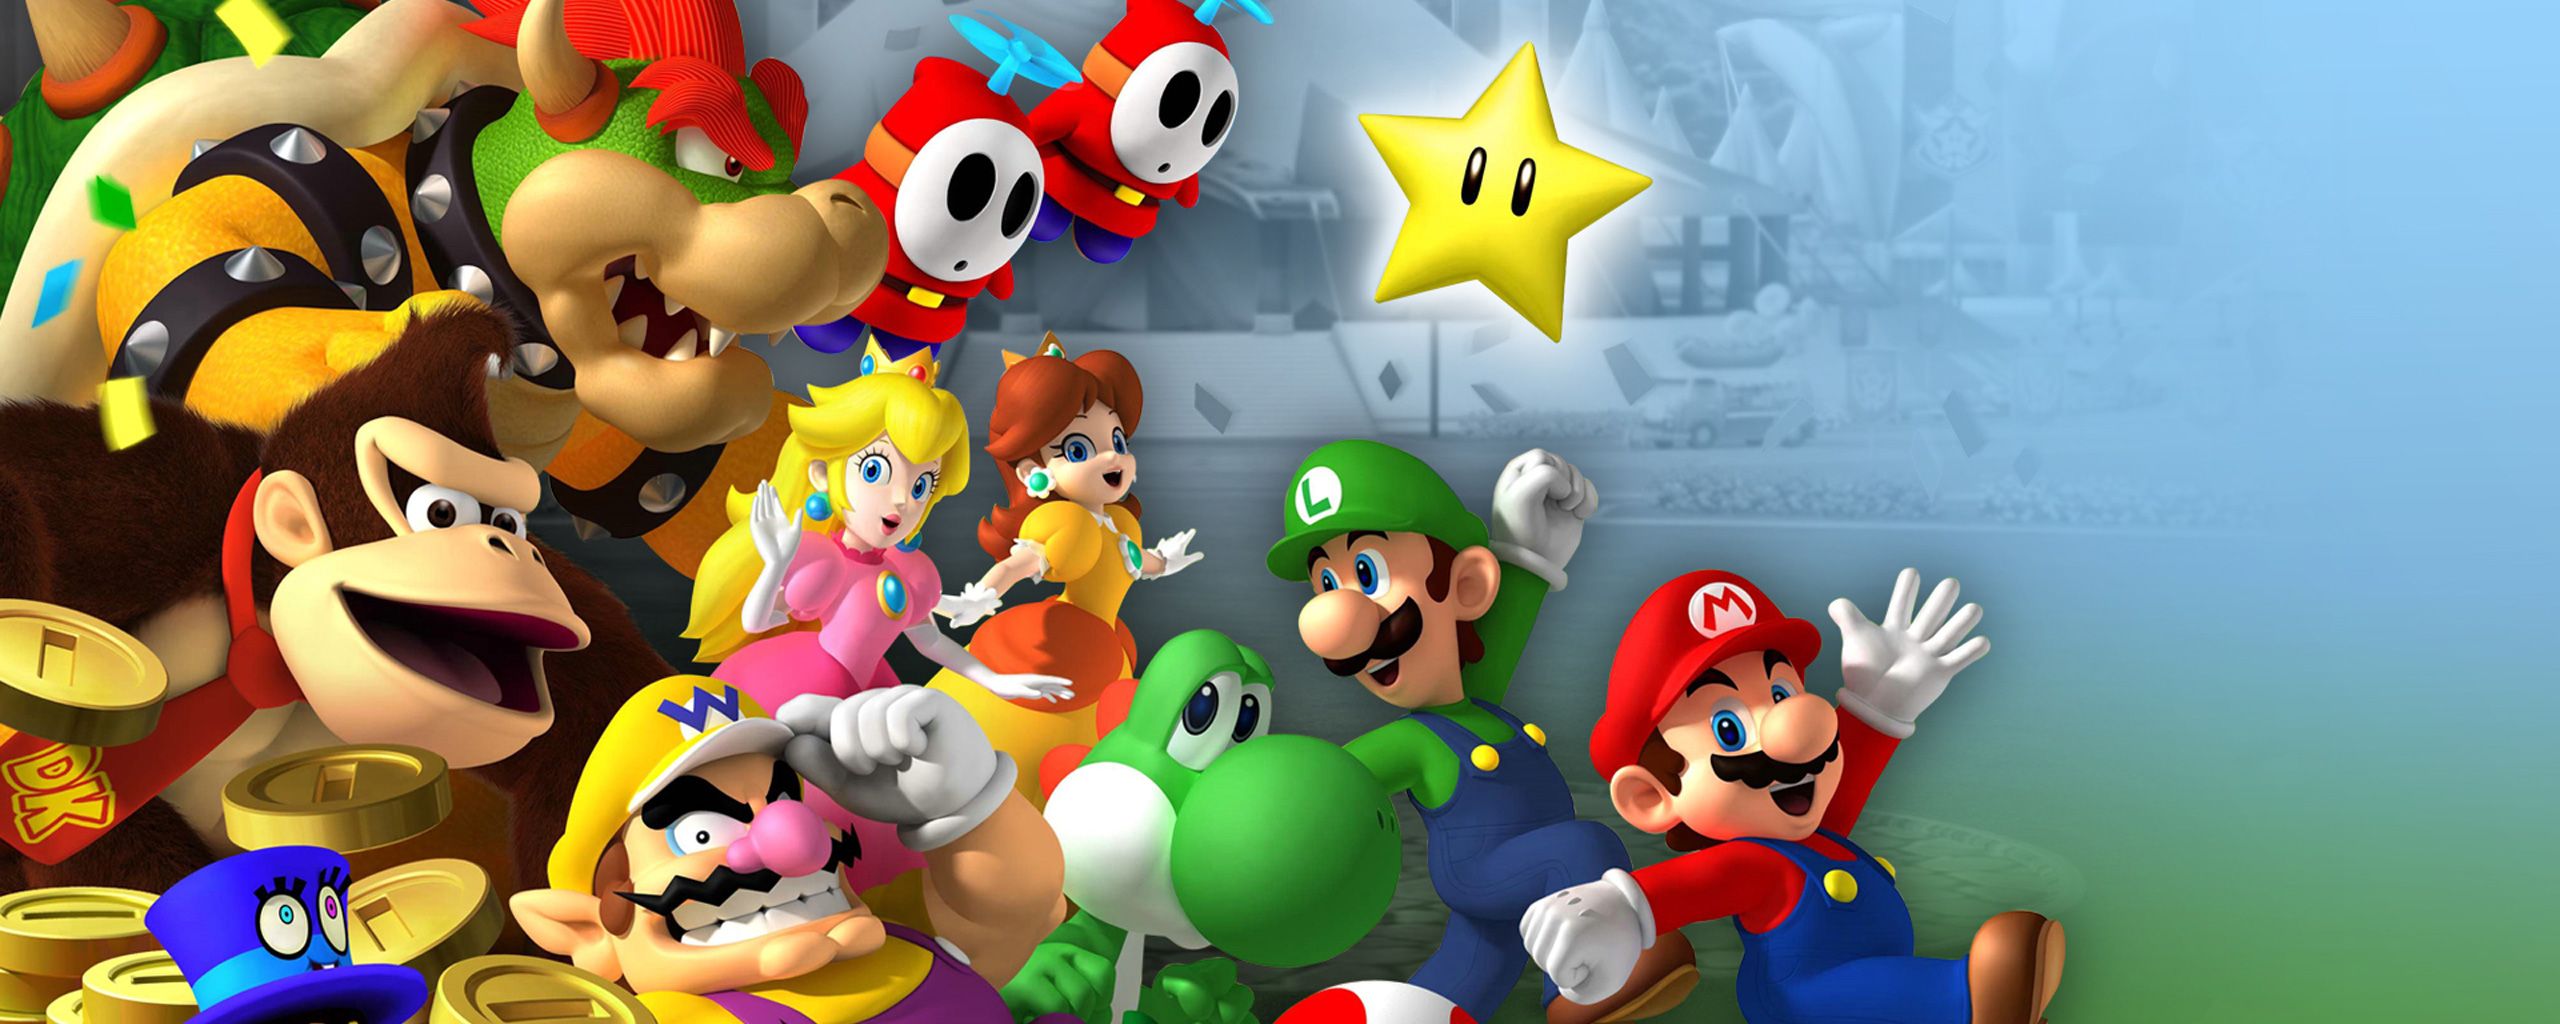 Video Game Mario Party 8 Wallpaper:2560x1024